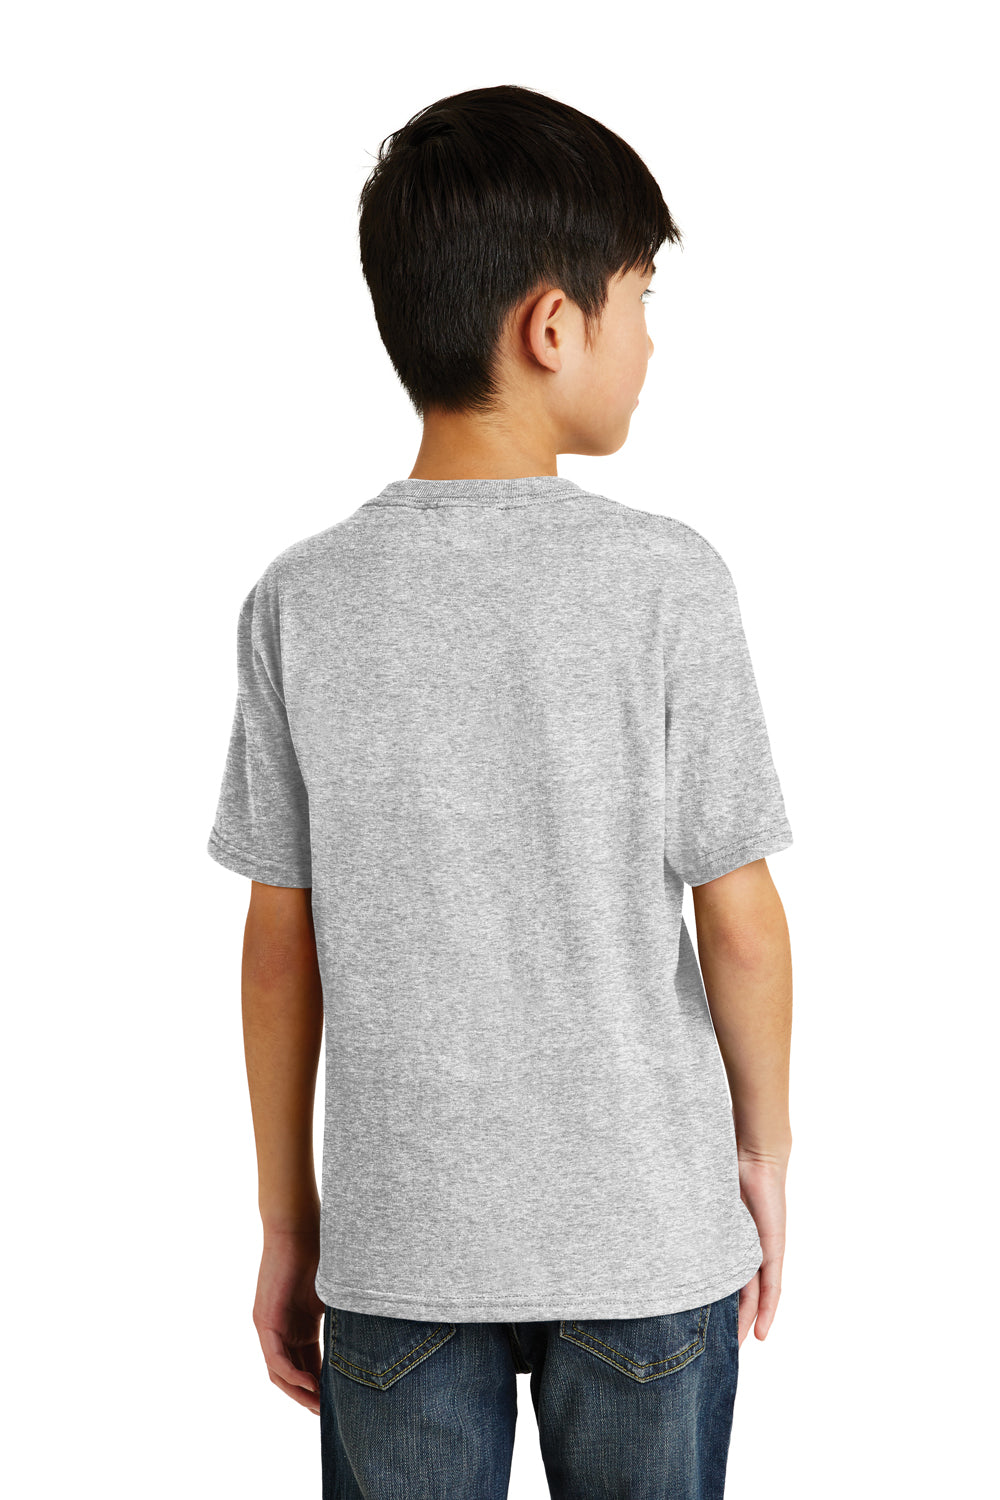 Port & Company PC55Y Youth Core Short Sleeve Crewneck T-Shirt Ash Grey Back